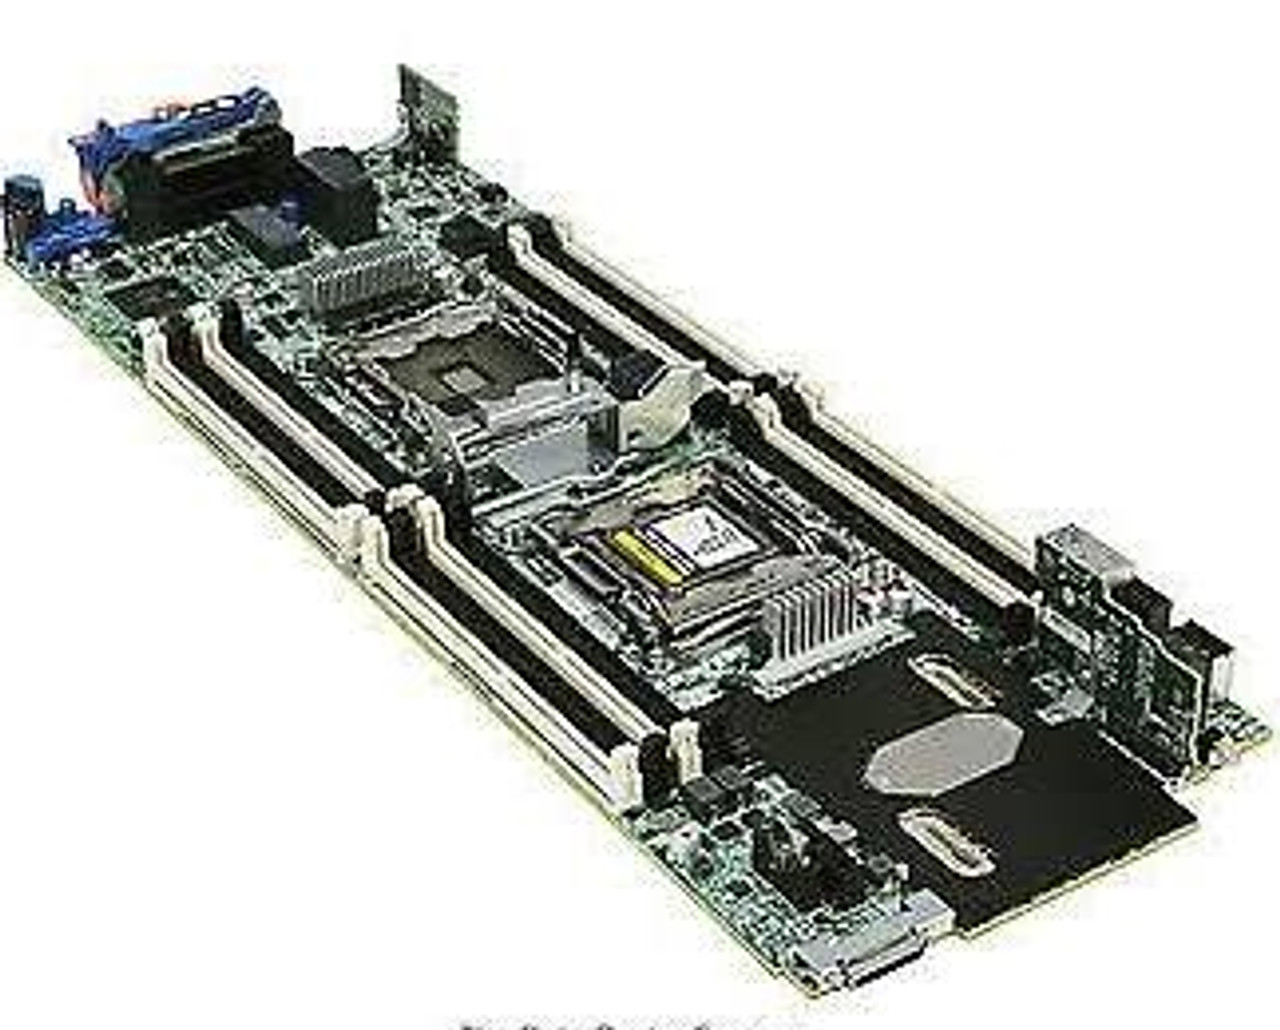 HP 820254-001 Intel Xeon E5-2600 V4 (broadwell) And E5-2600 V3(haswell) Processors System Board For Proliant Bl460c Gen9 Server